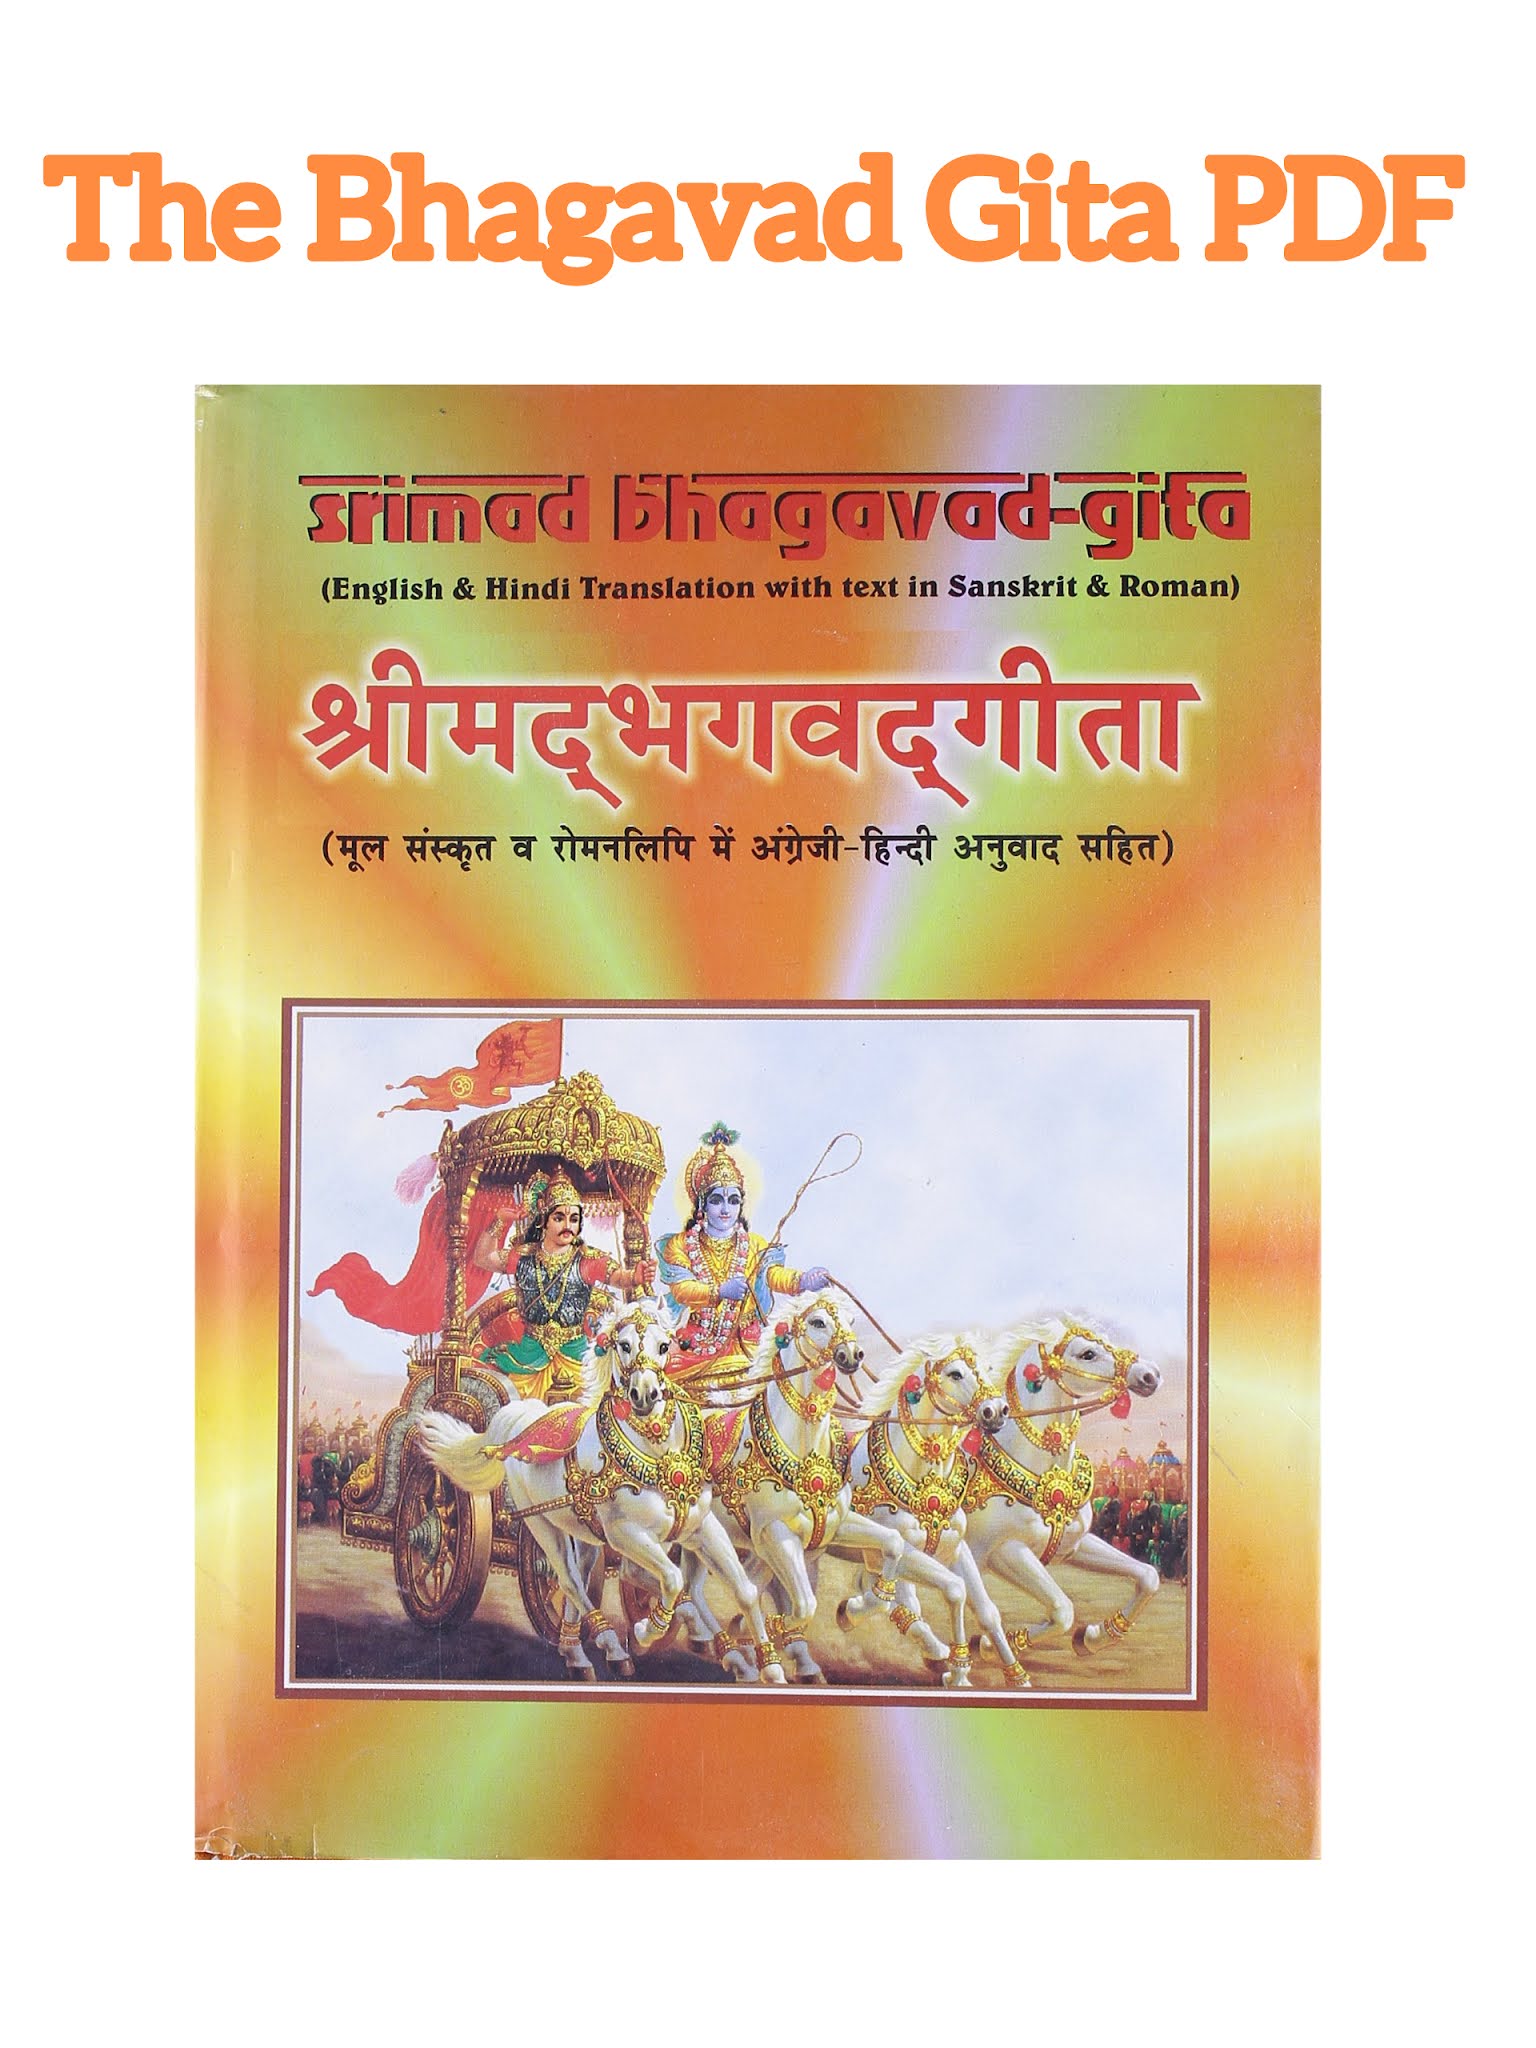 The Bhagavad Gita PDF